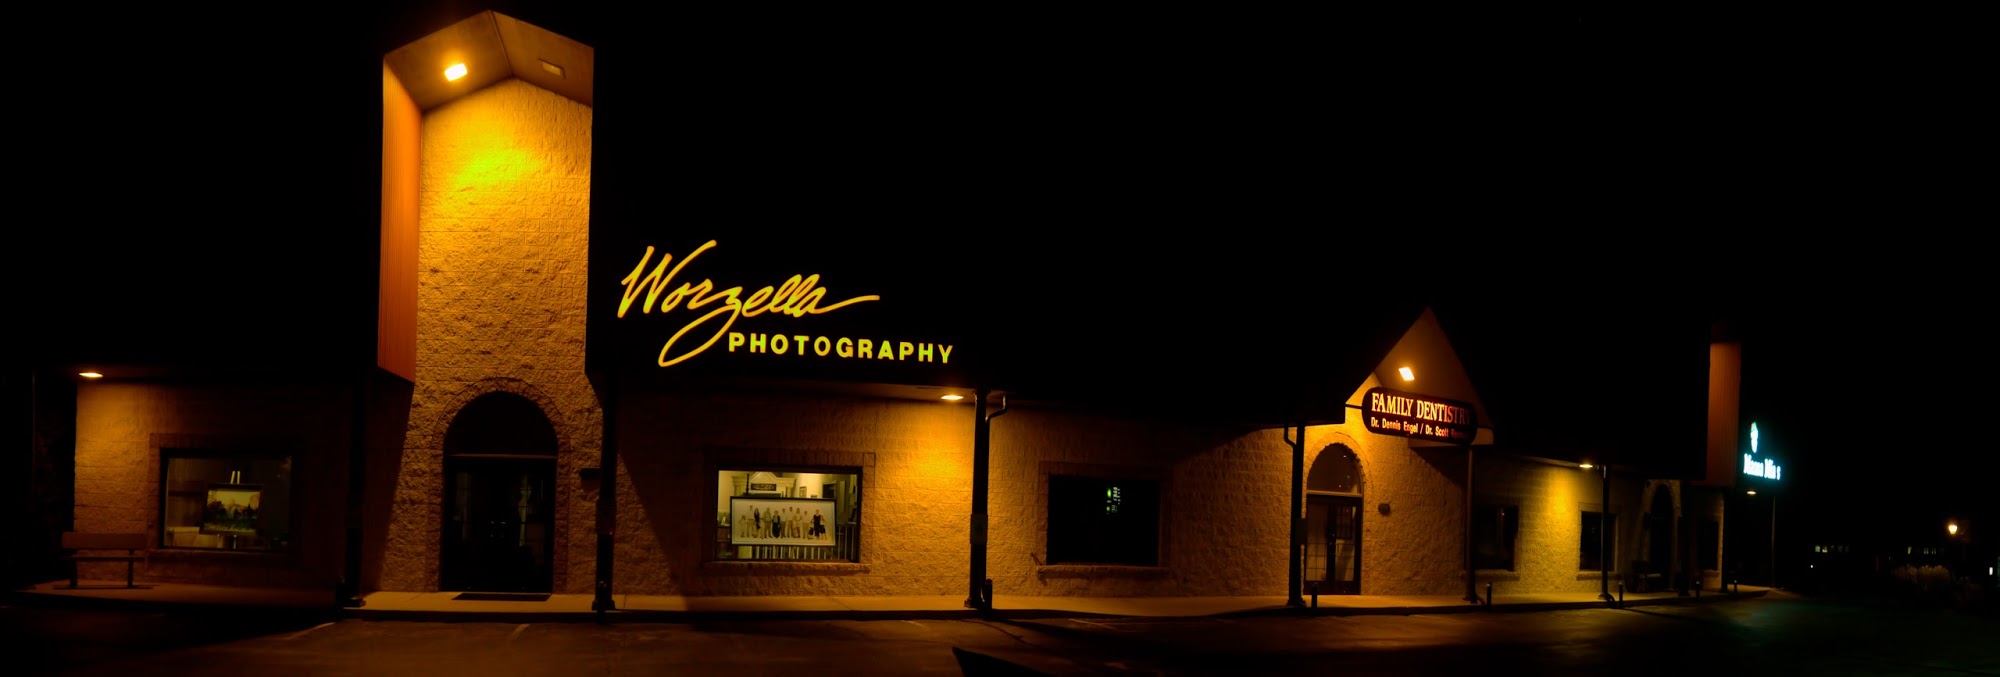 Worzella Photography Inc